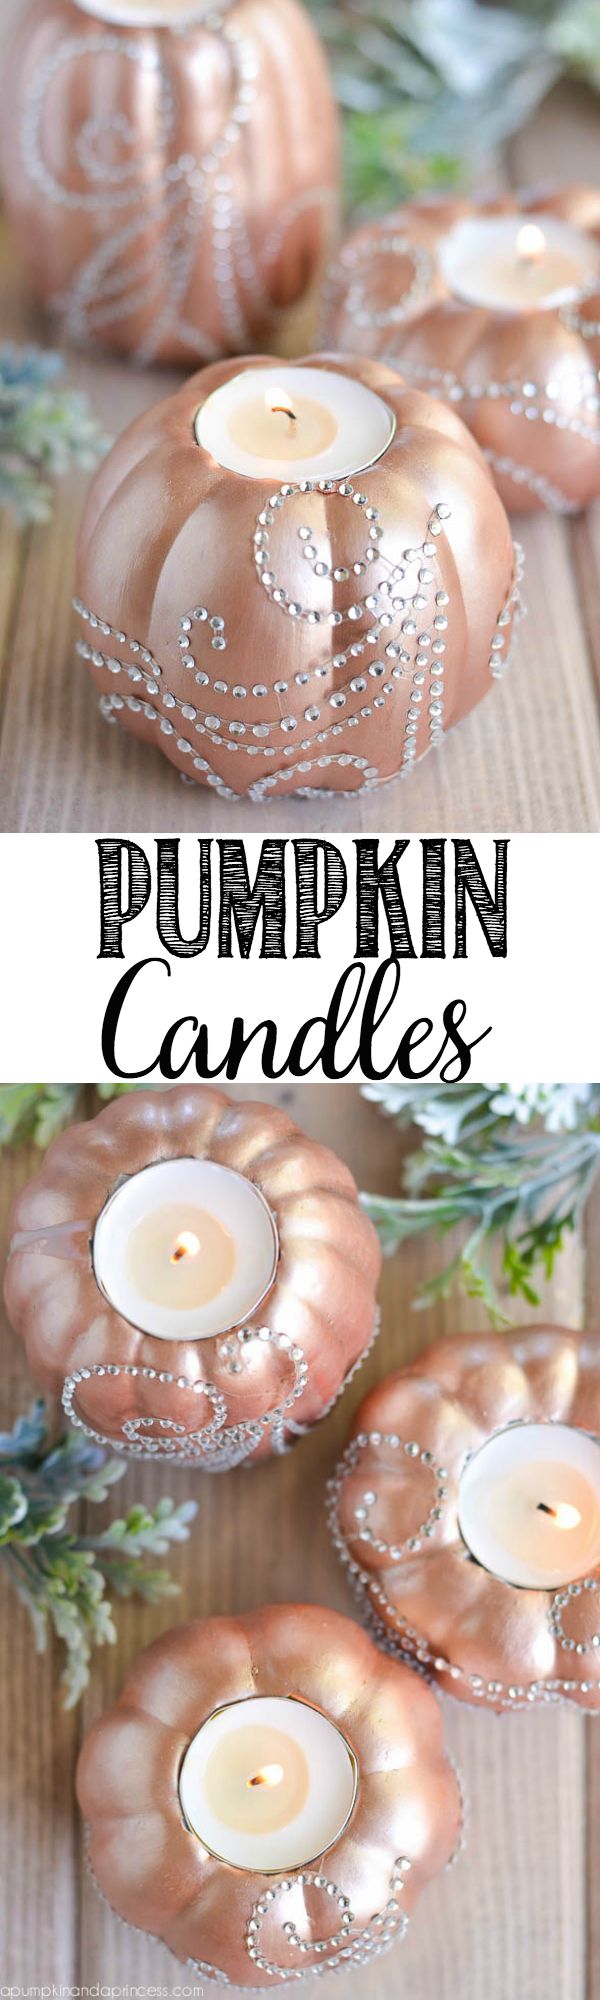 DIY-Pumpkin-Candles1